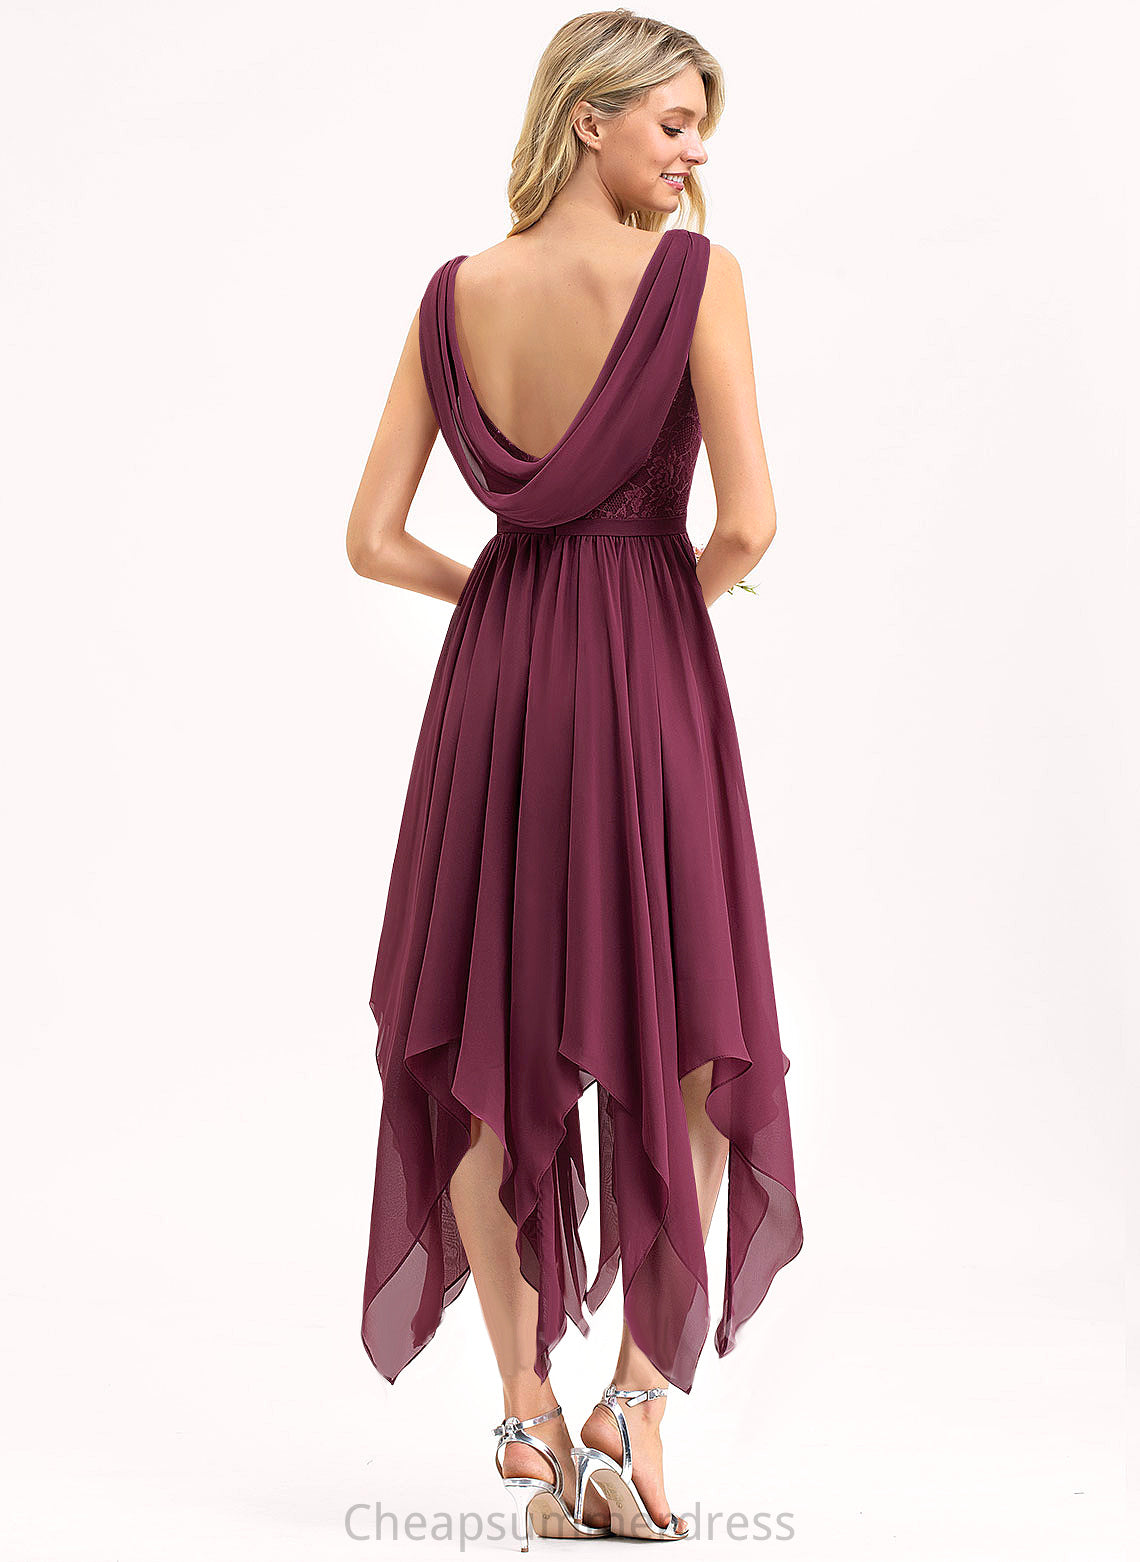 Neckline V-neck A-Line Ankle-Length Silhouette Fabric Straps Length Lace Ali V-Neck Sleeveless